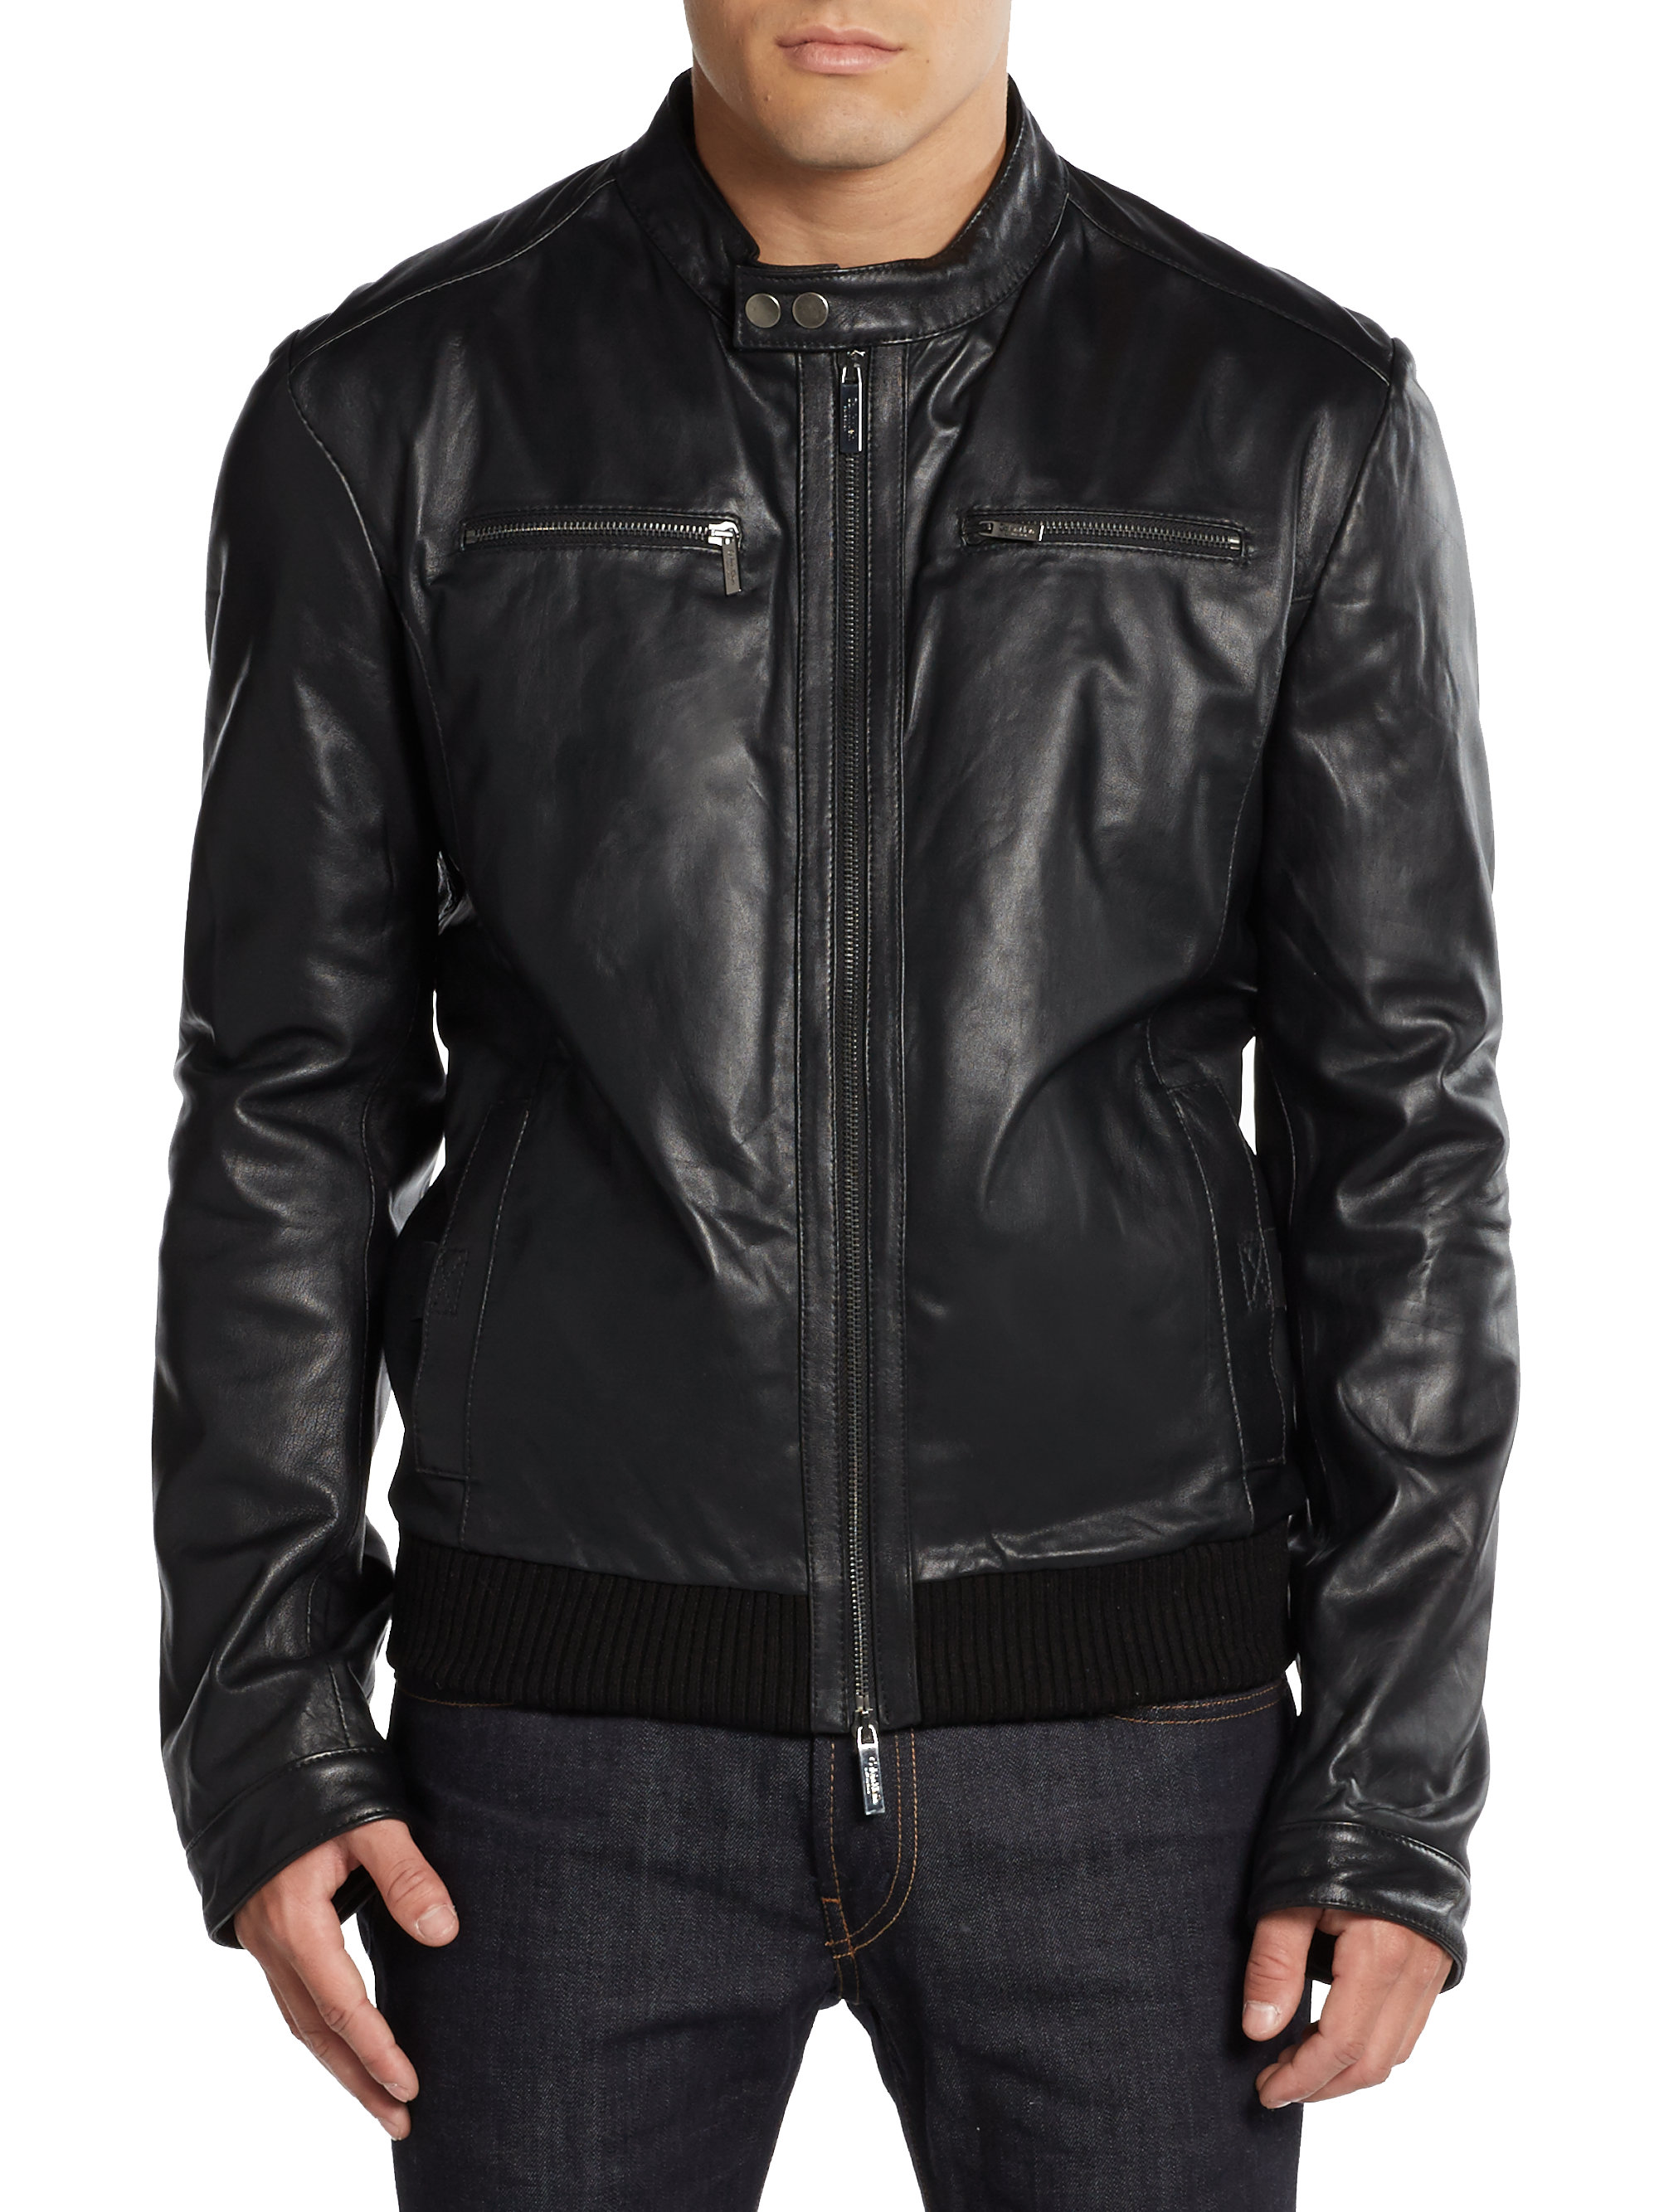 Lyst - Calvin Klein Basar Leather Biker Jacket in Black for Men